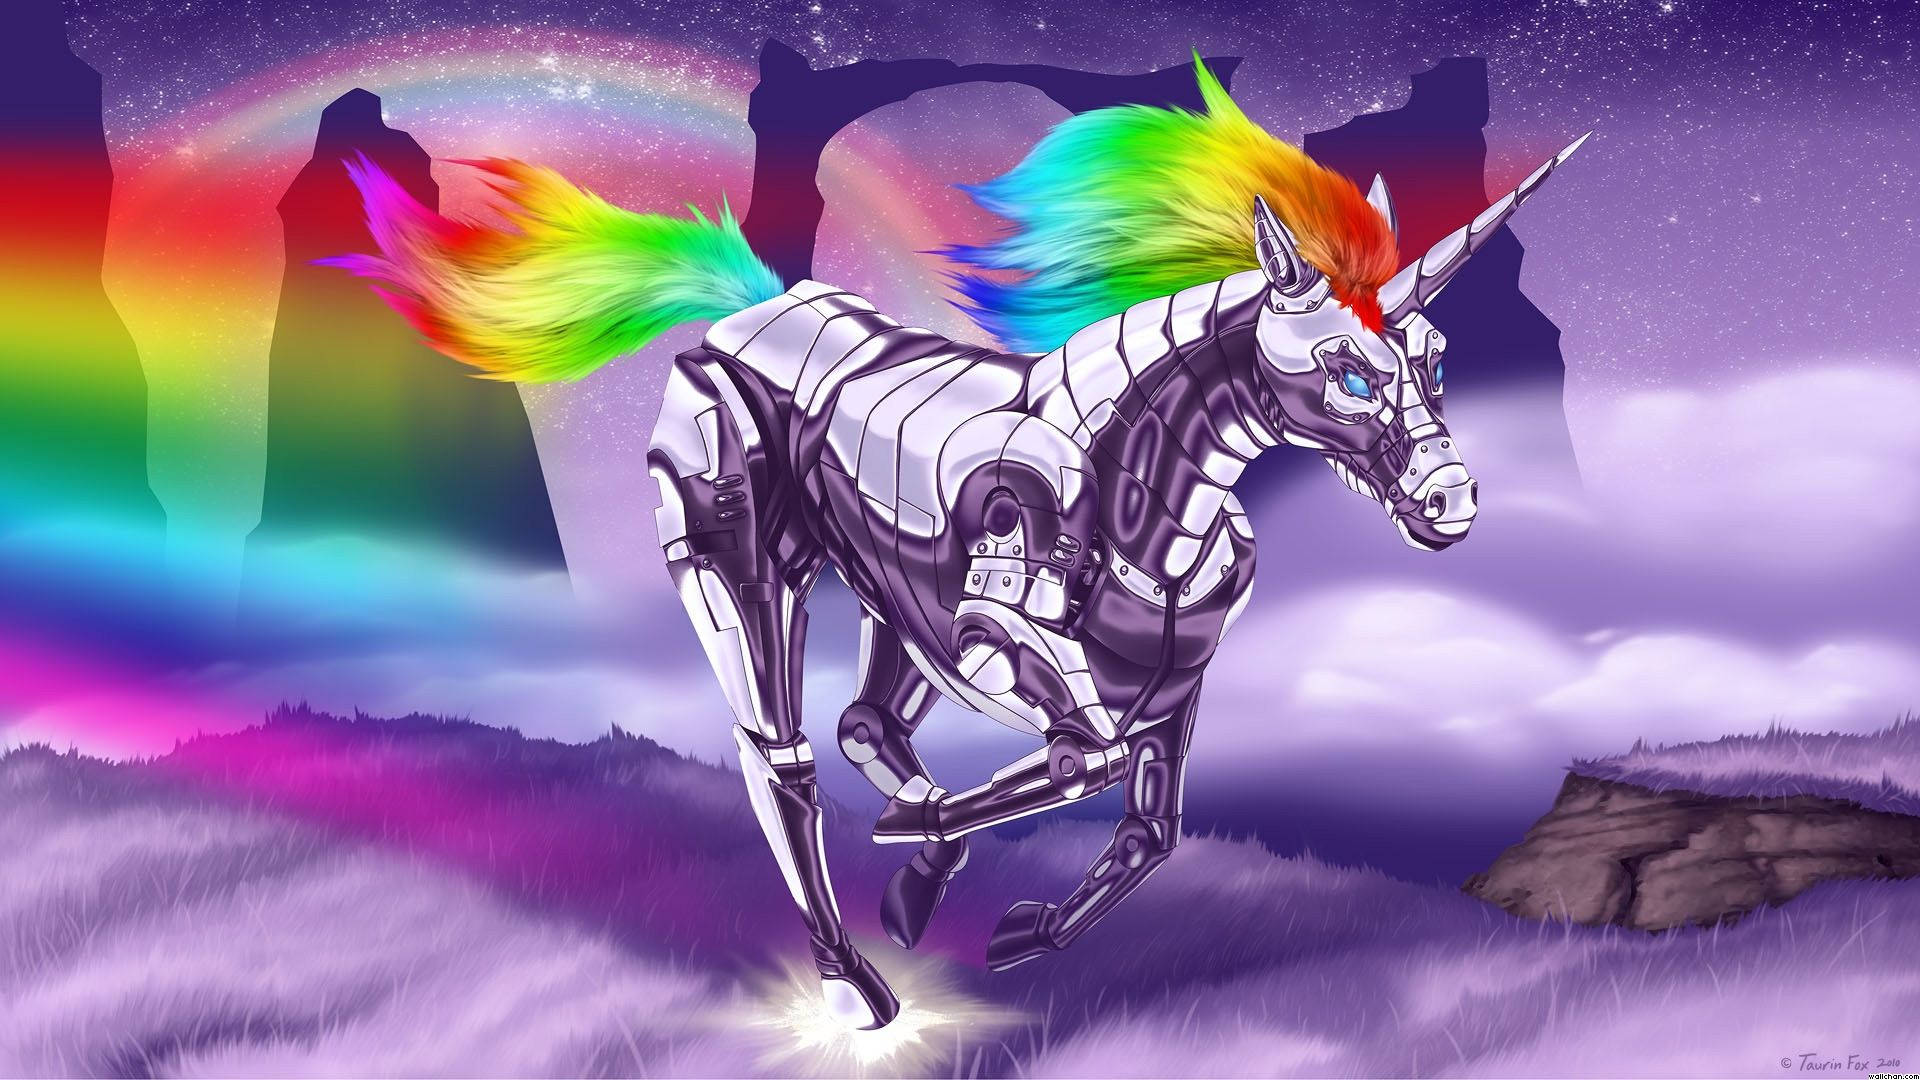 Caption: Majestic Metallic Rainbow Unicorn